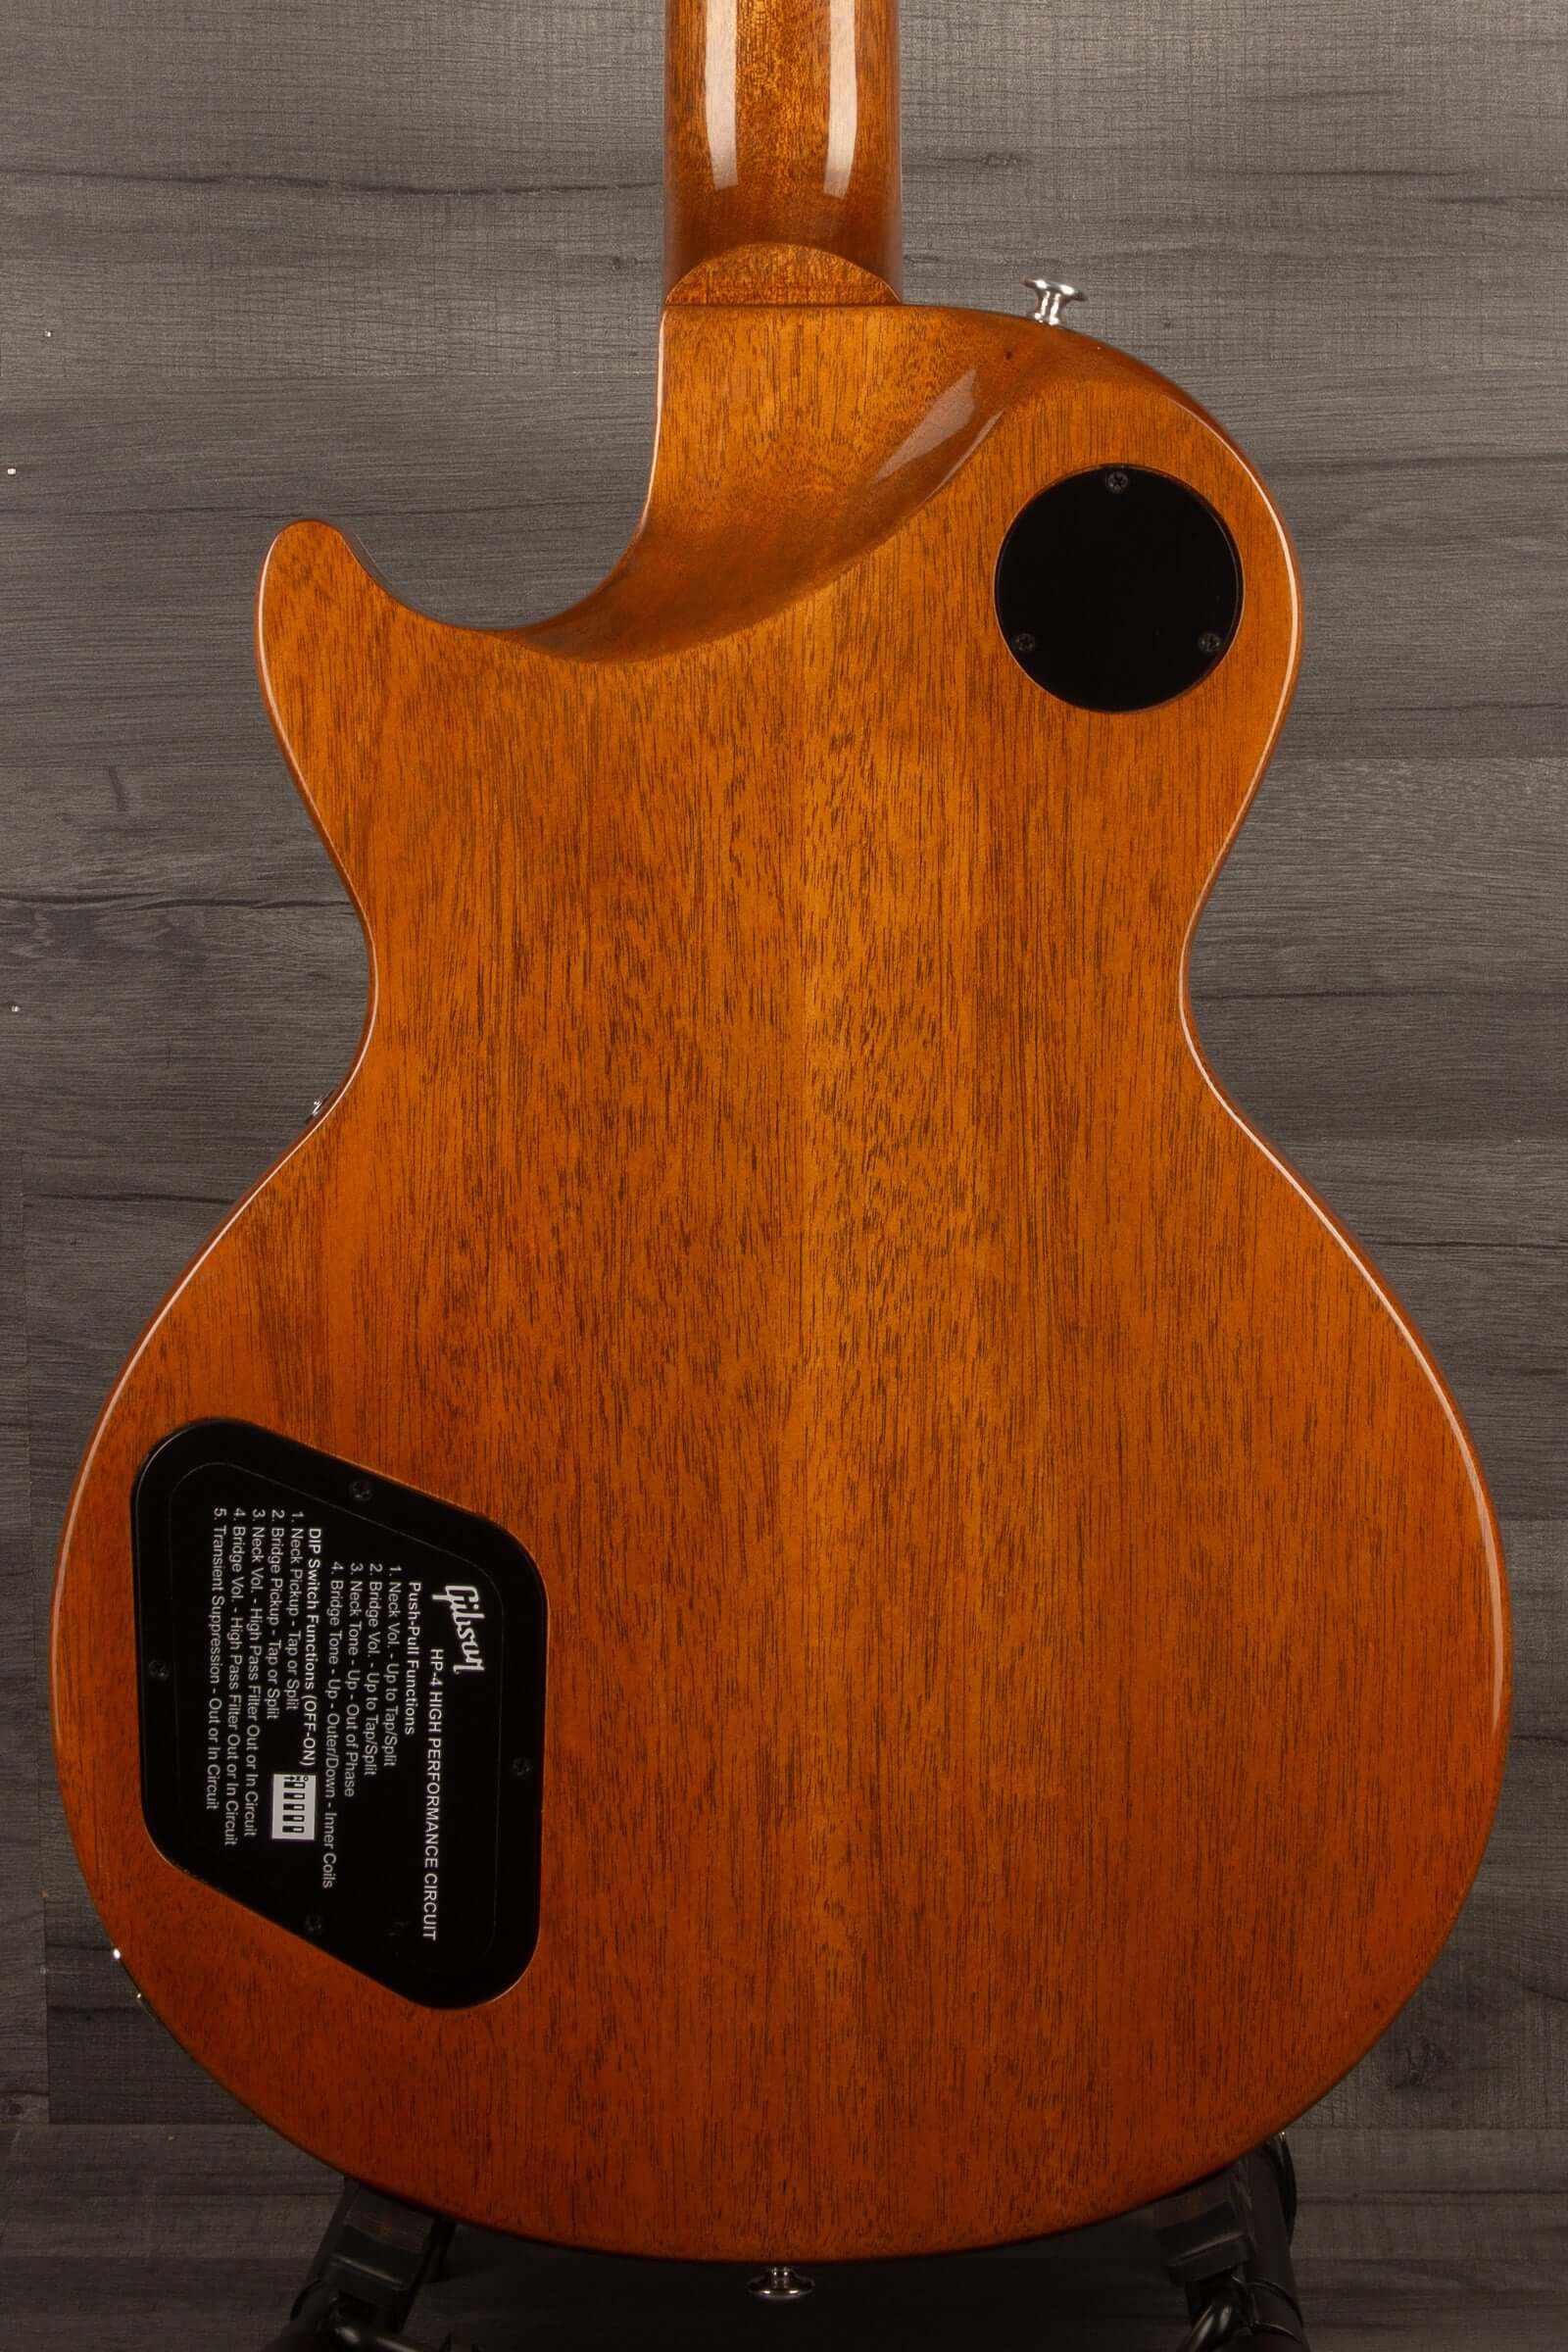 USED - Gibson Les Paul Modern 2021 Pelham Blue